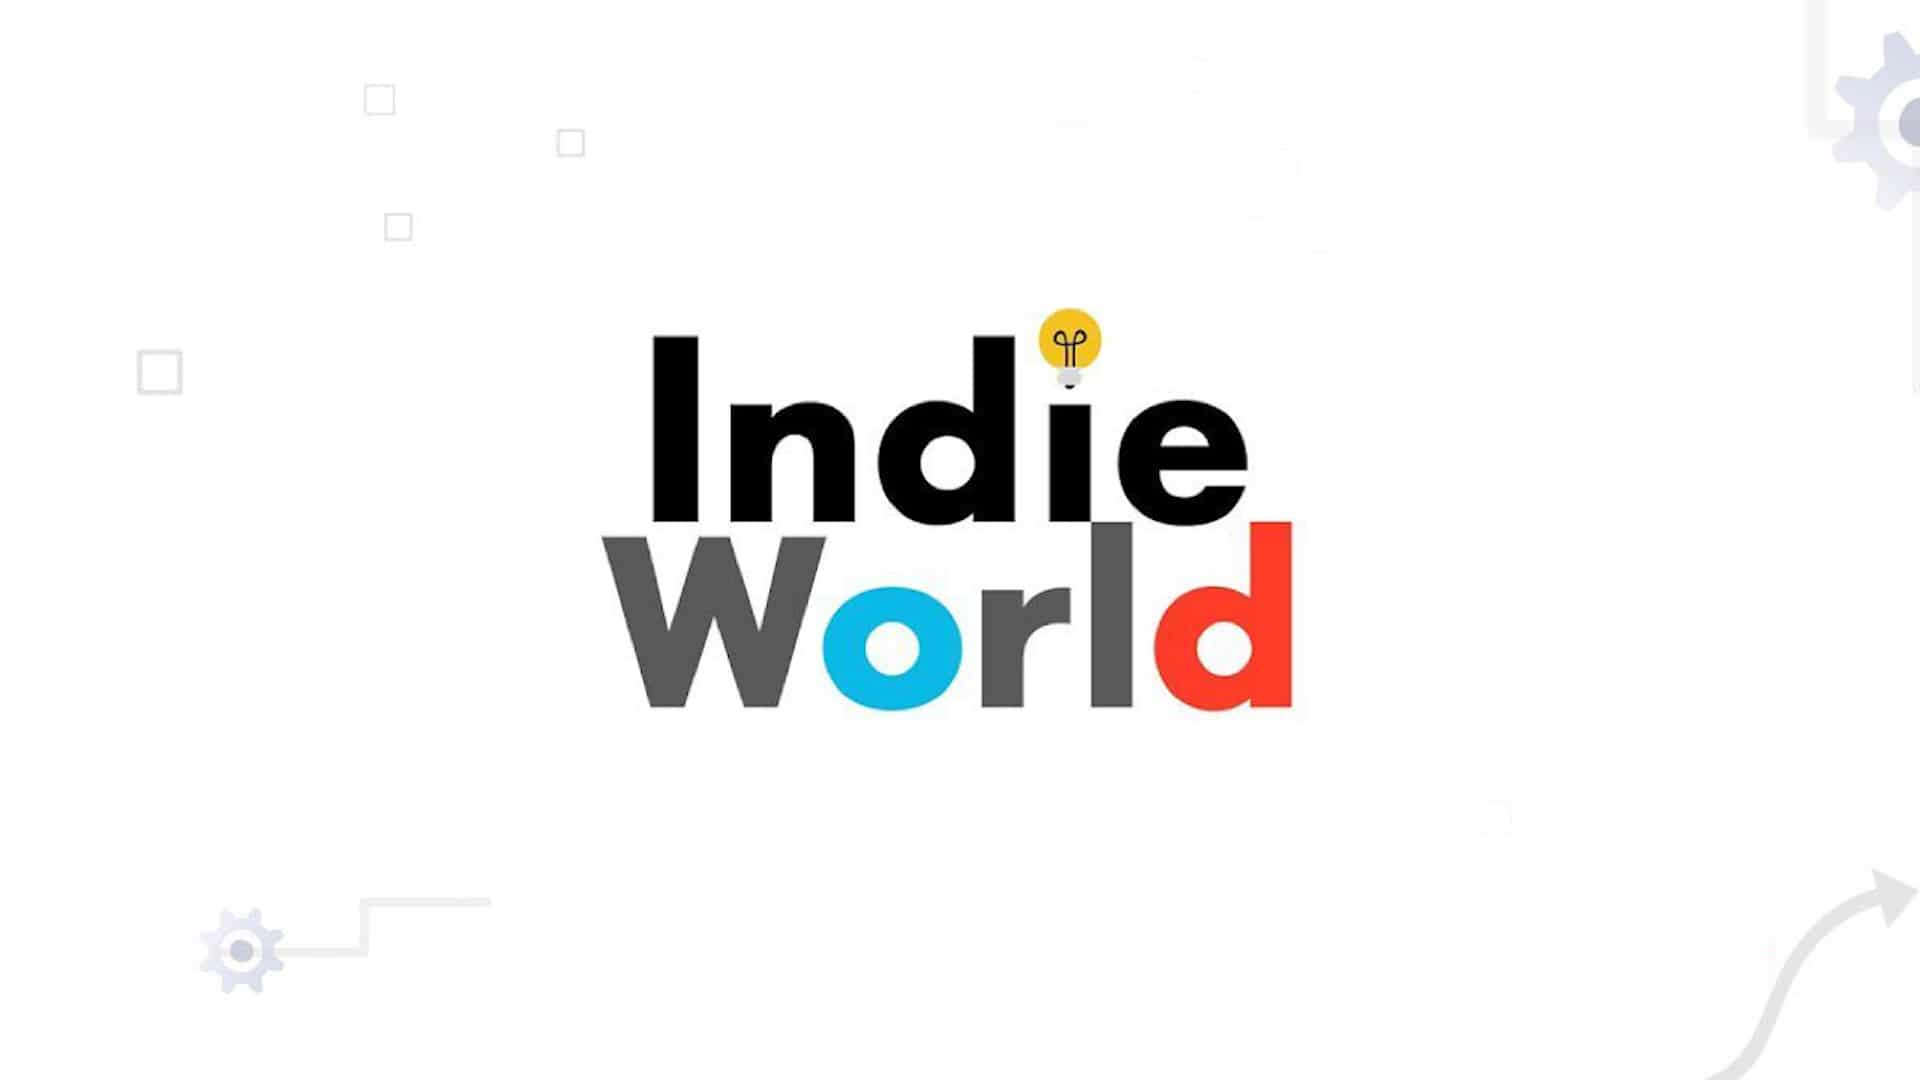 Indie World - Nintendo en indé